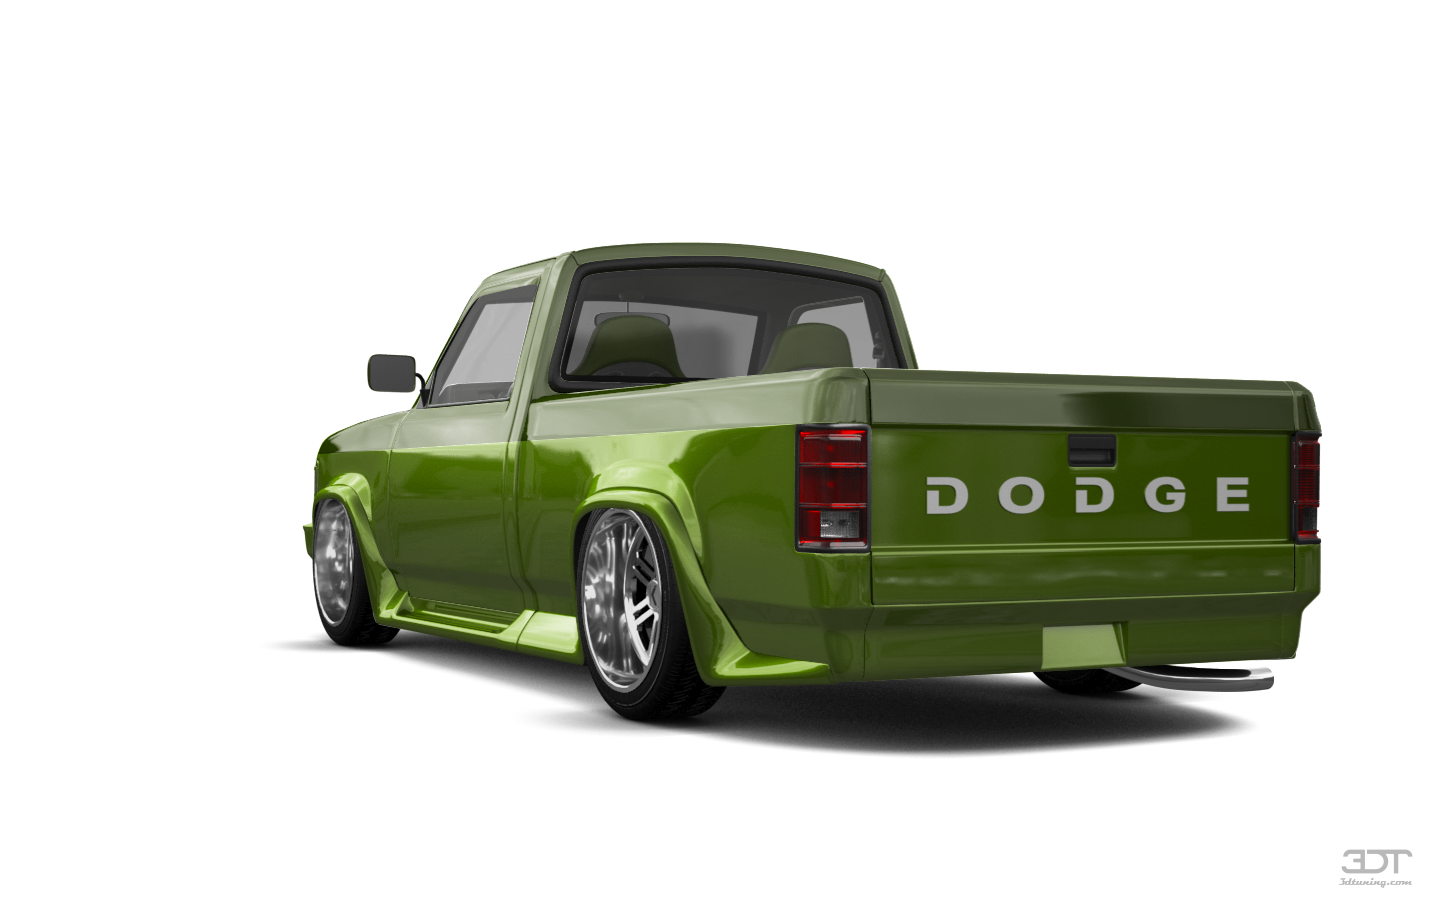 Dodge Dakota Regular Cab 2 Door pickup truck 1987 tuning